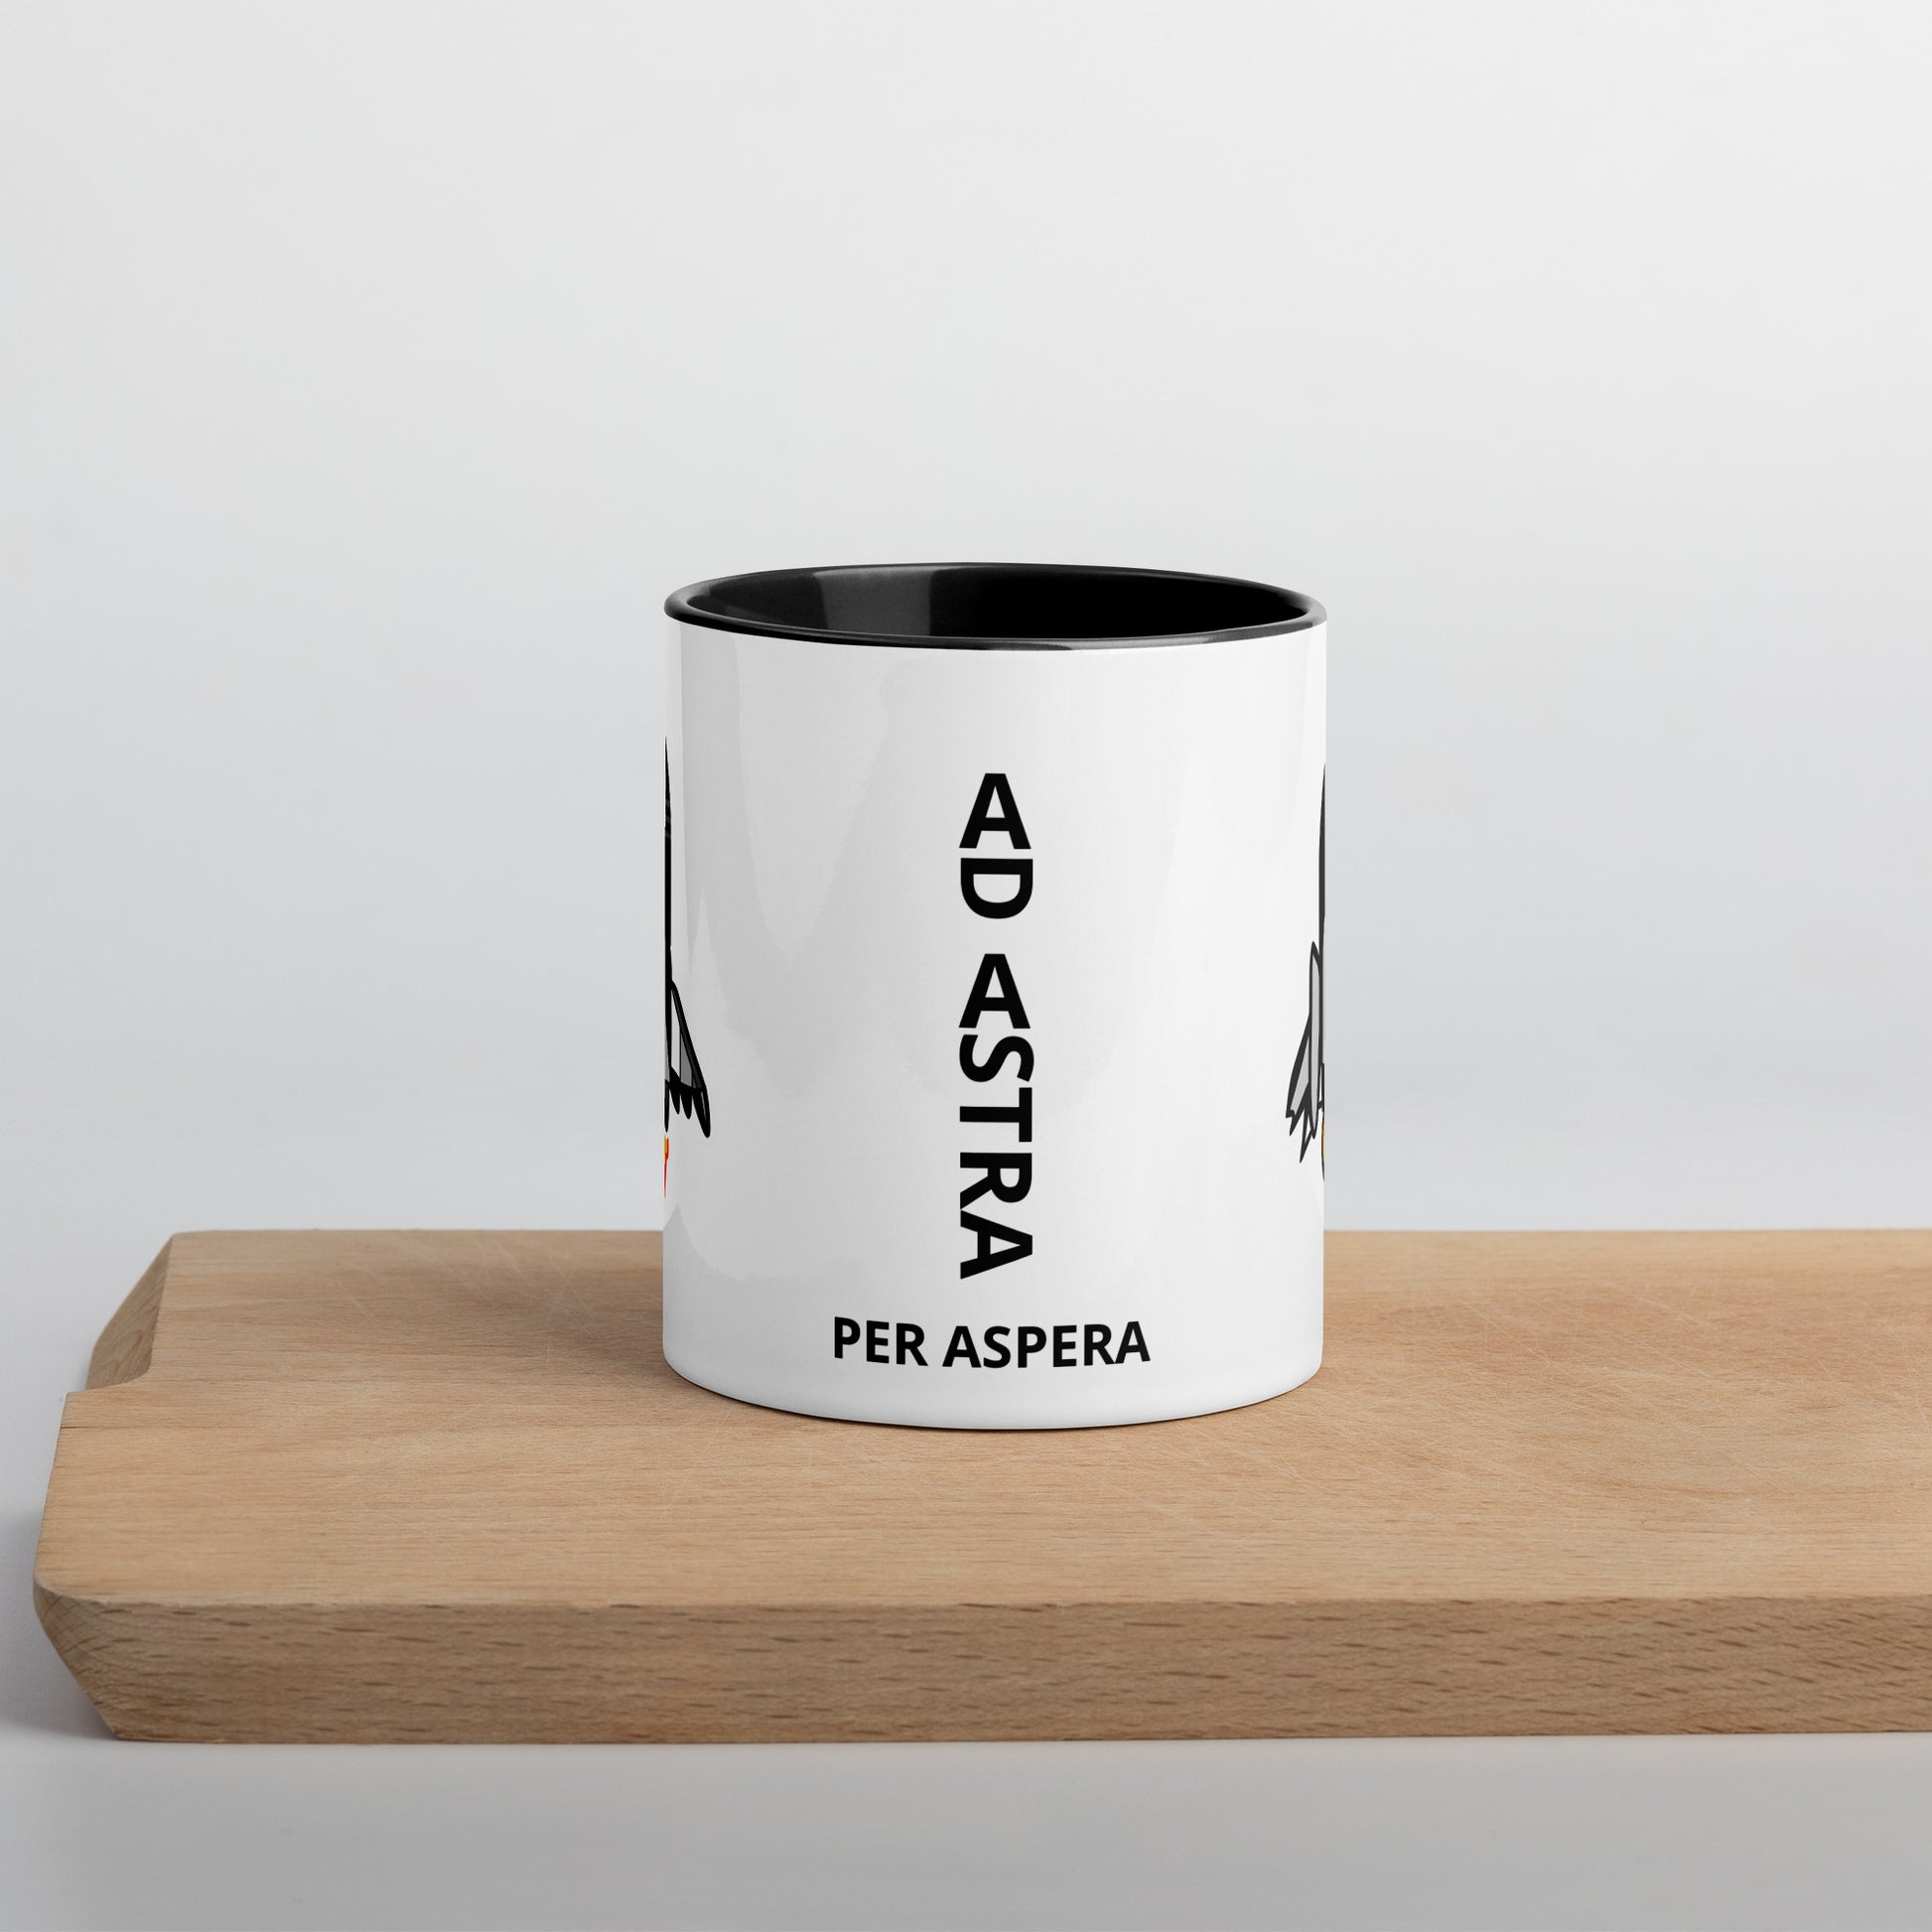 coffee mug showing the words Ad Astra Per Aspera in a creative way